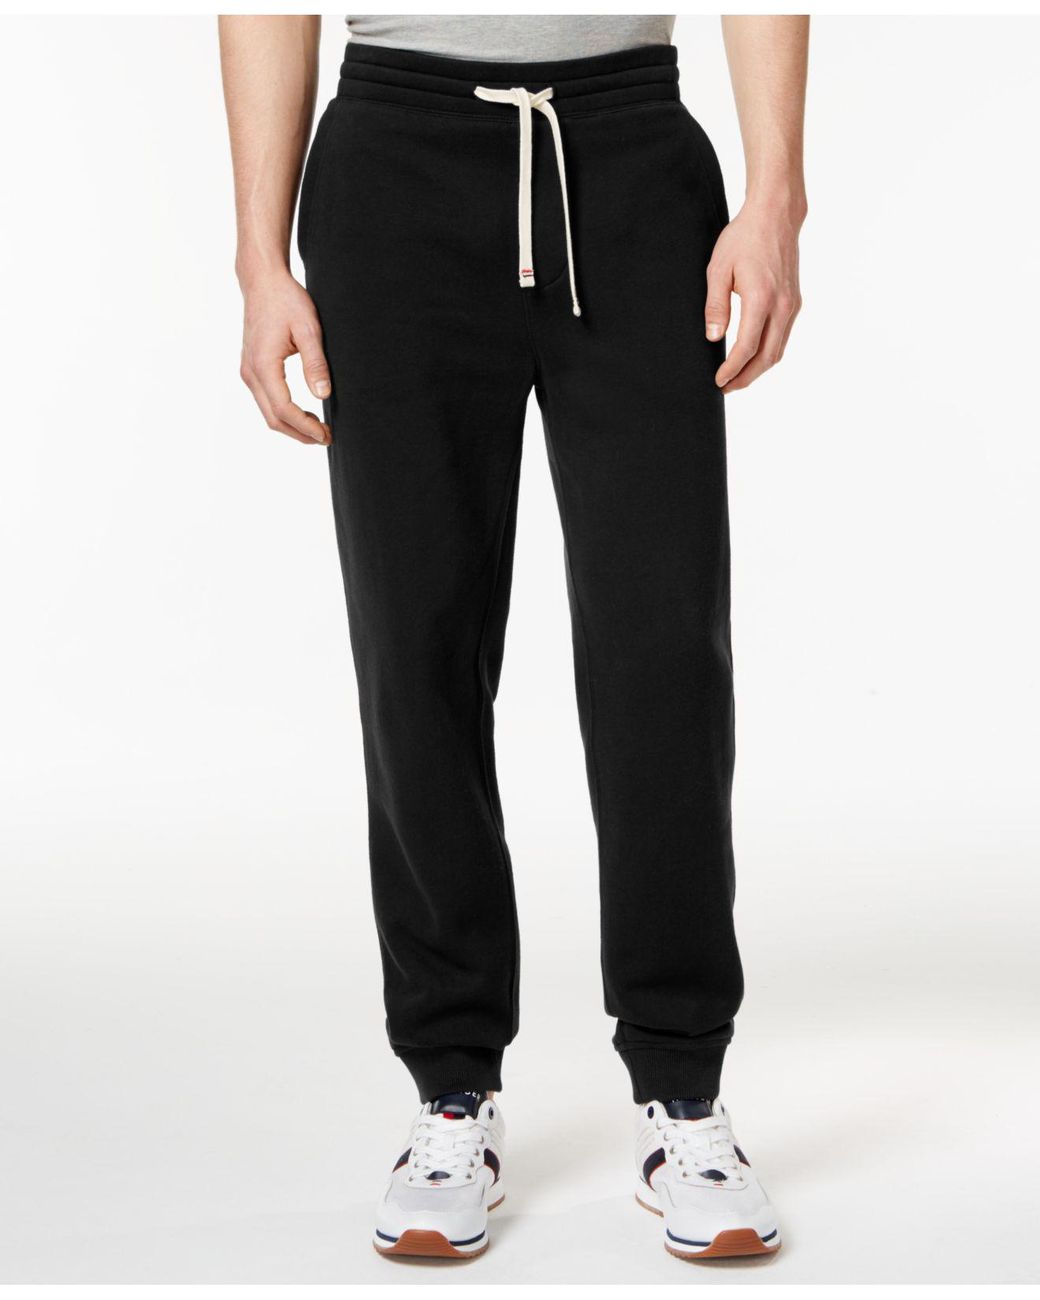 Tommy Hilfiger Synthetic Men's Shep Sweatpants in Black for Men - Save ...